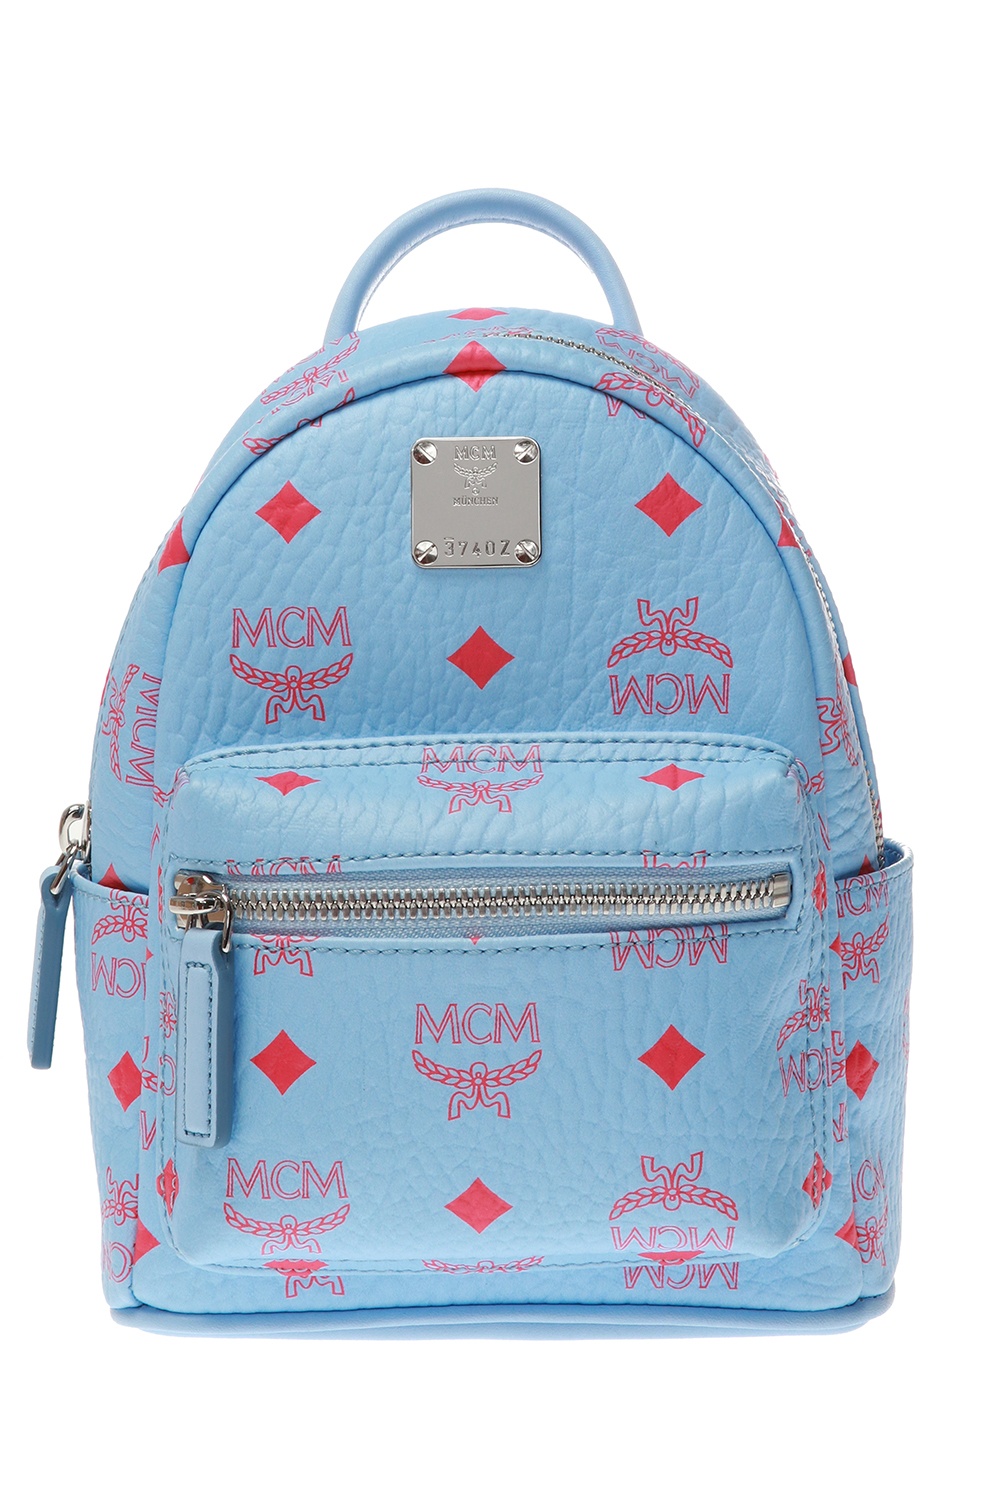 Blue Backpack with logo MCM - Vitkac HK